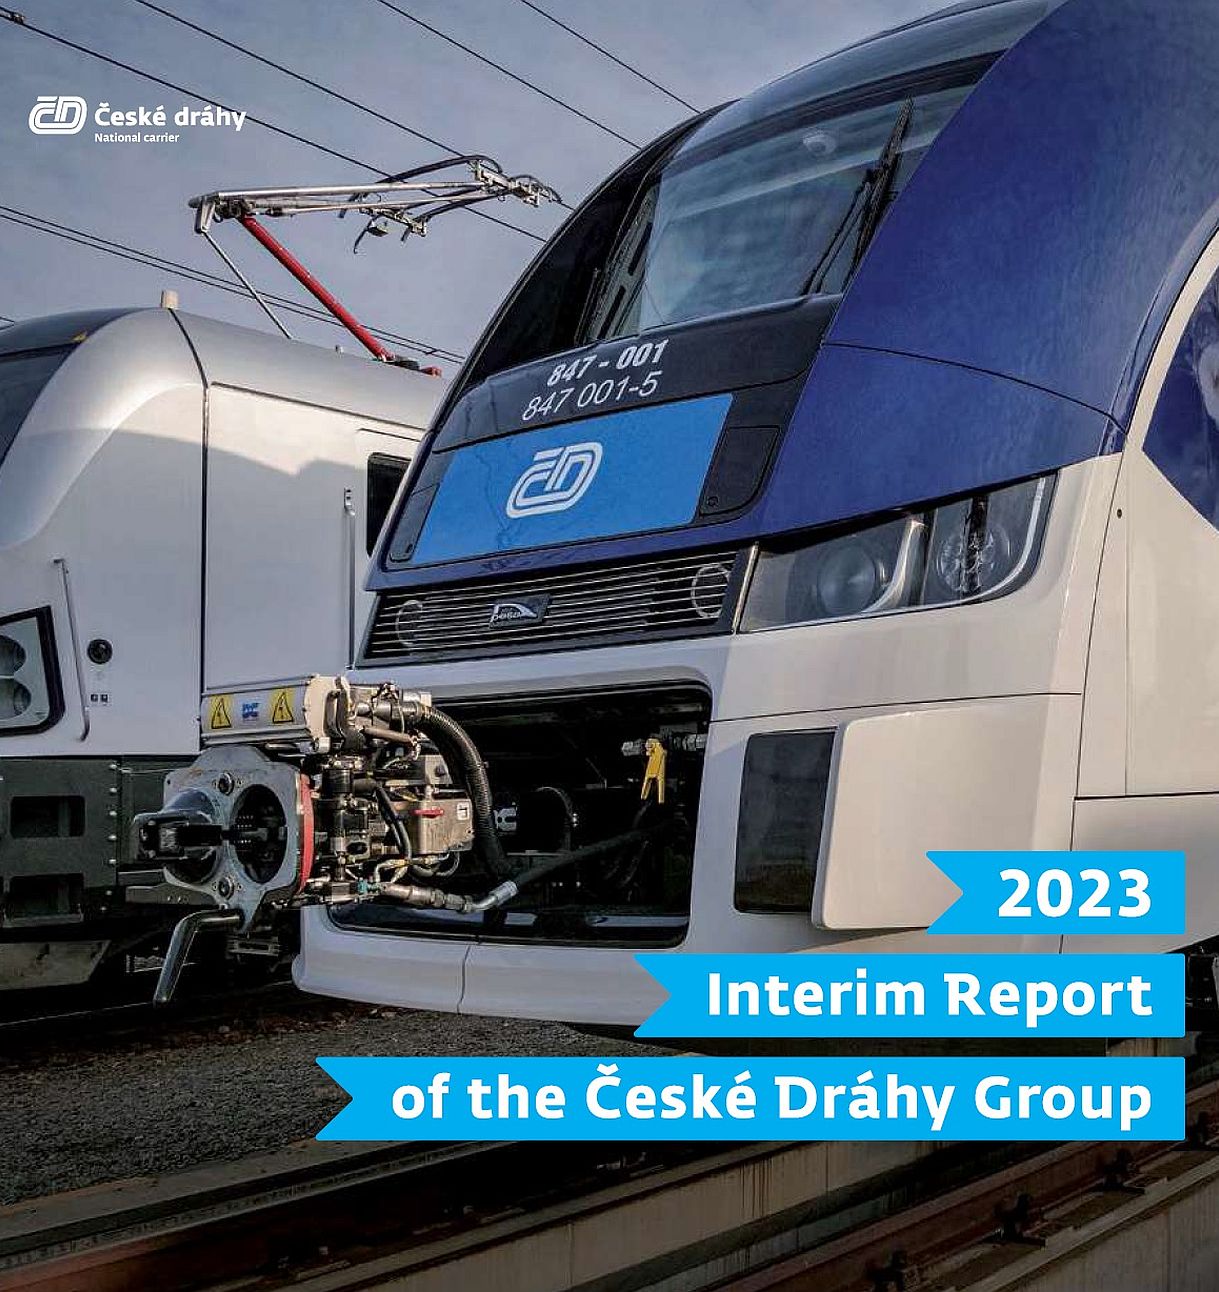 ČD Group Interim Report 2023